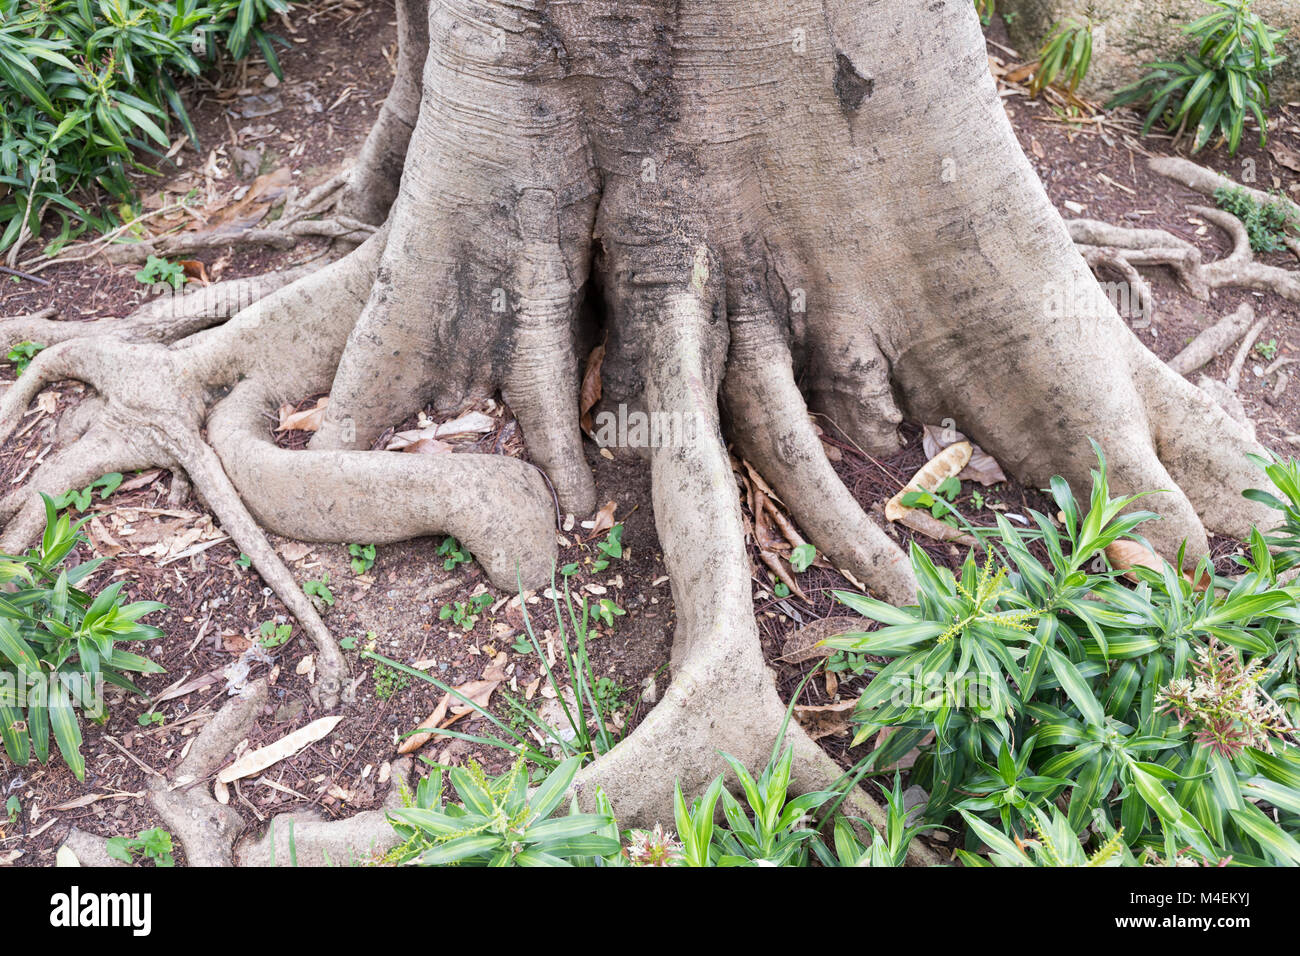 Tree Roots Stock Photo